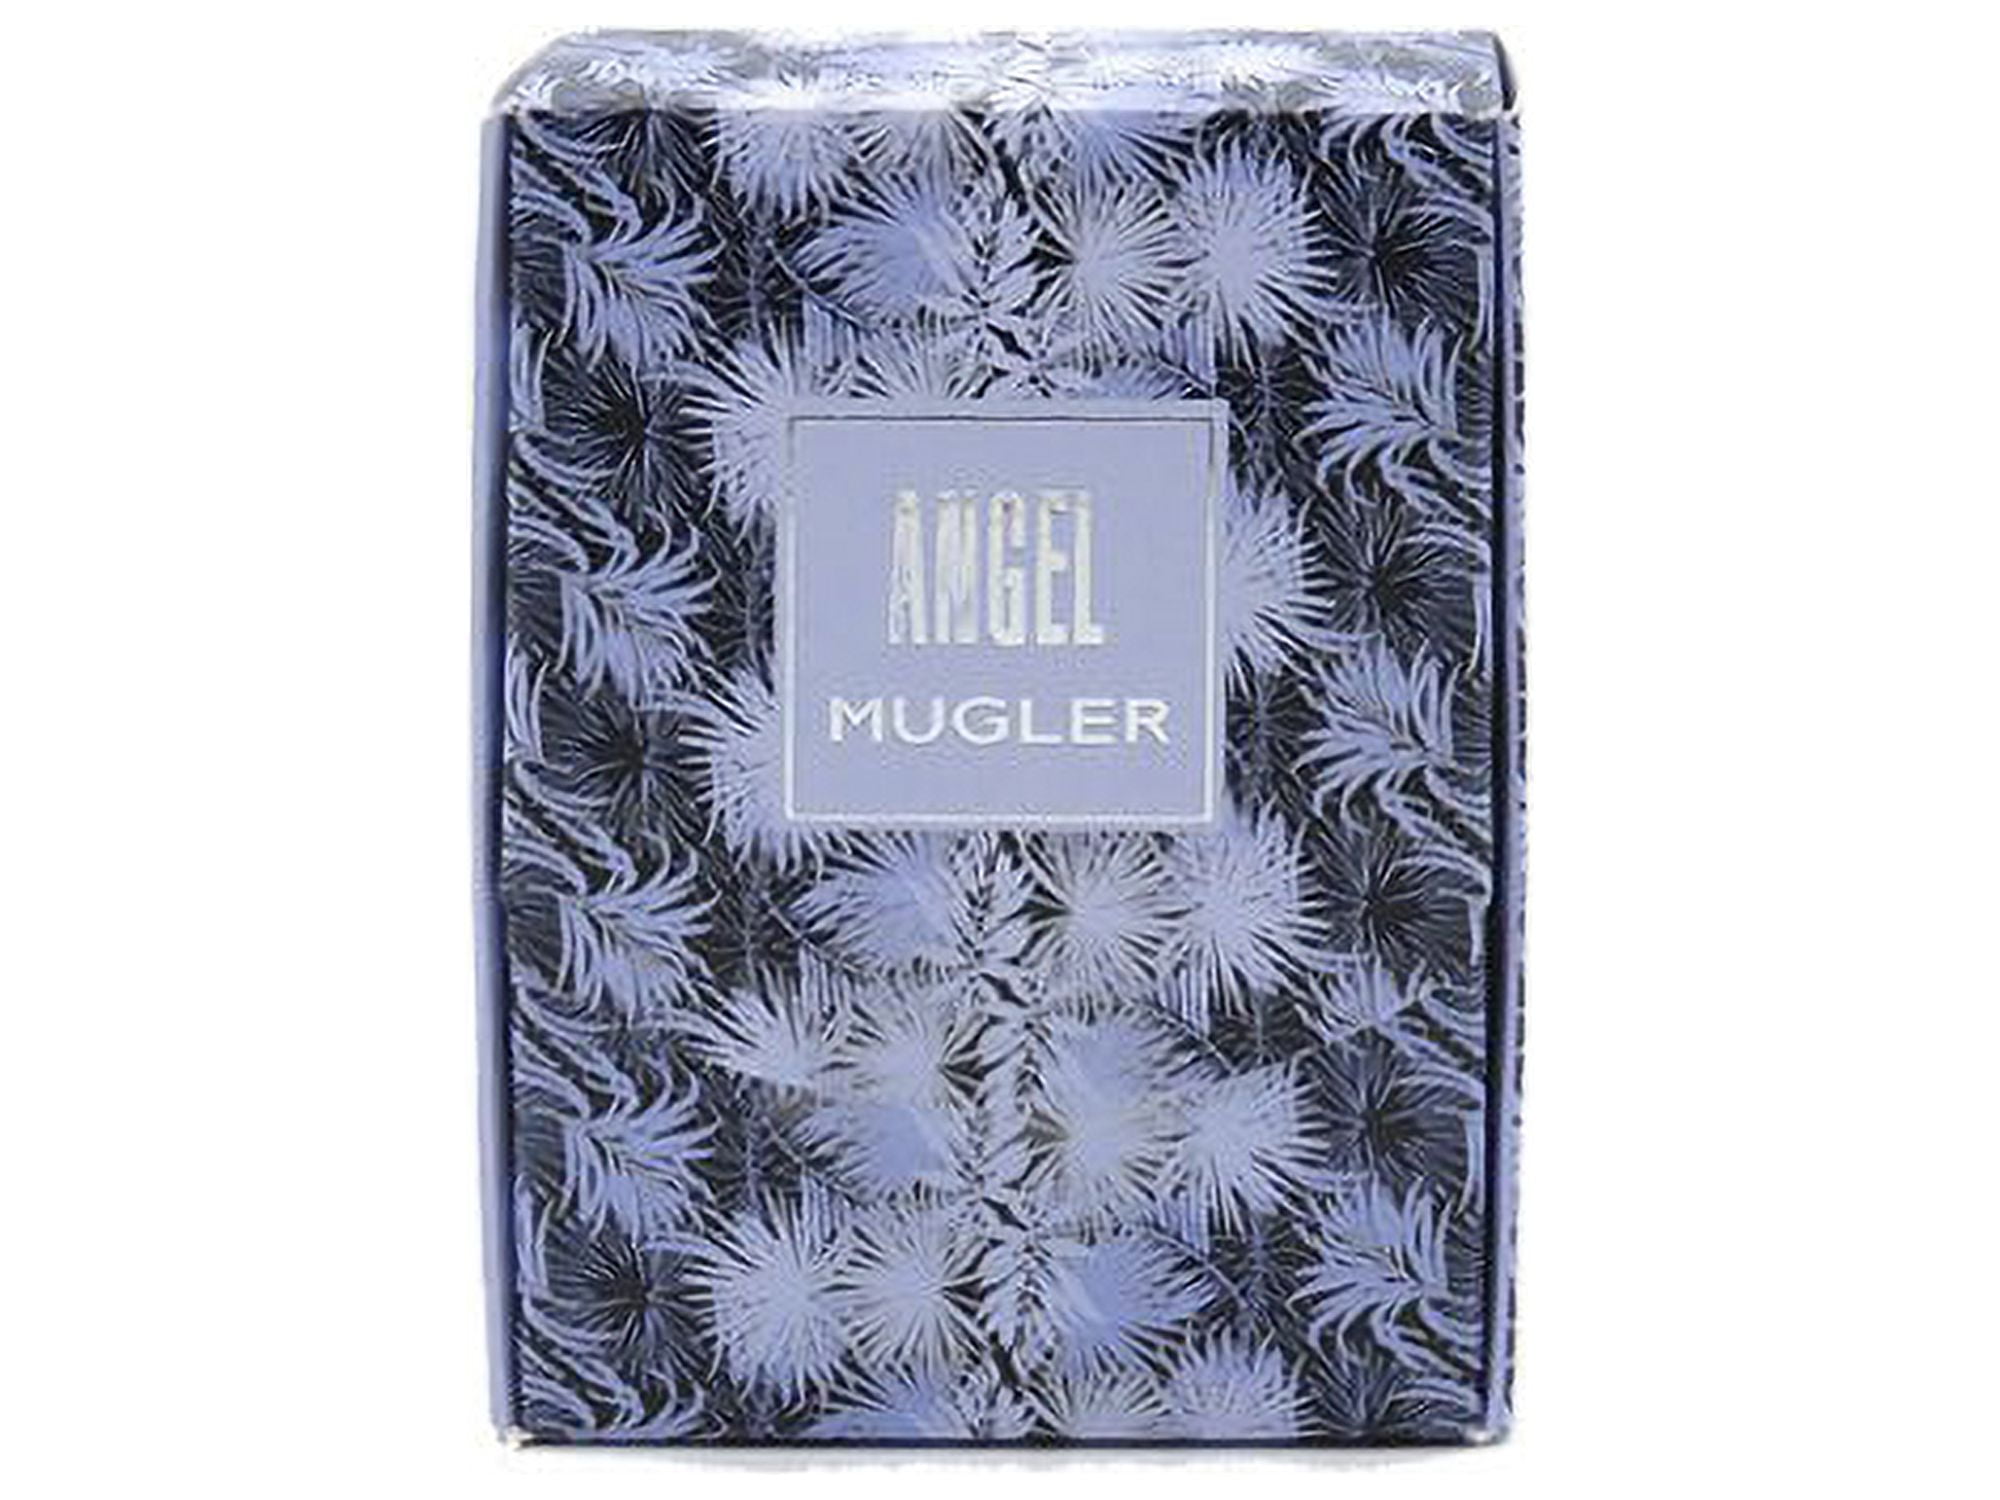 Mugler Angel Eau de Parfum Travel Refillable Purse Spray - 0.3oz